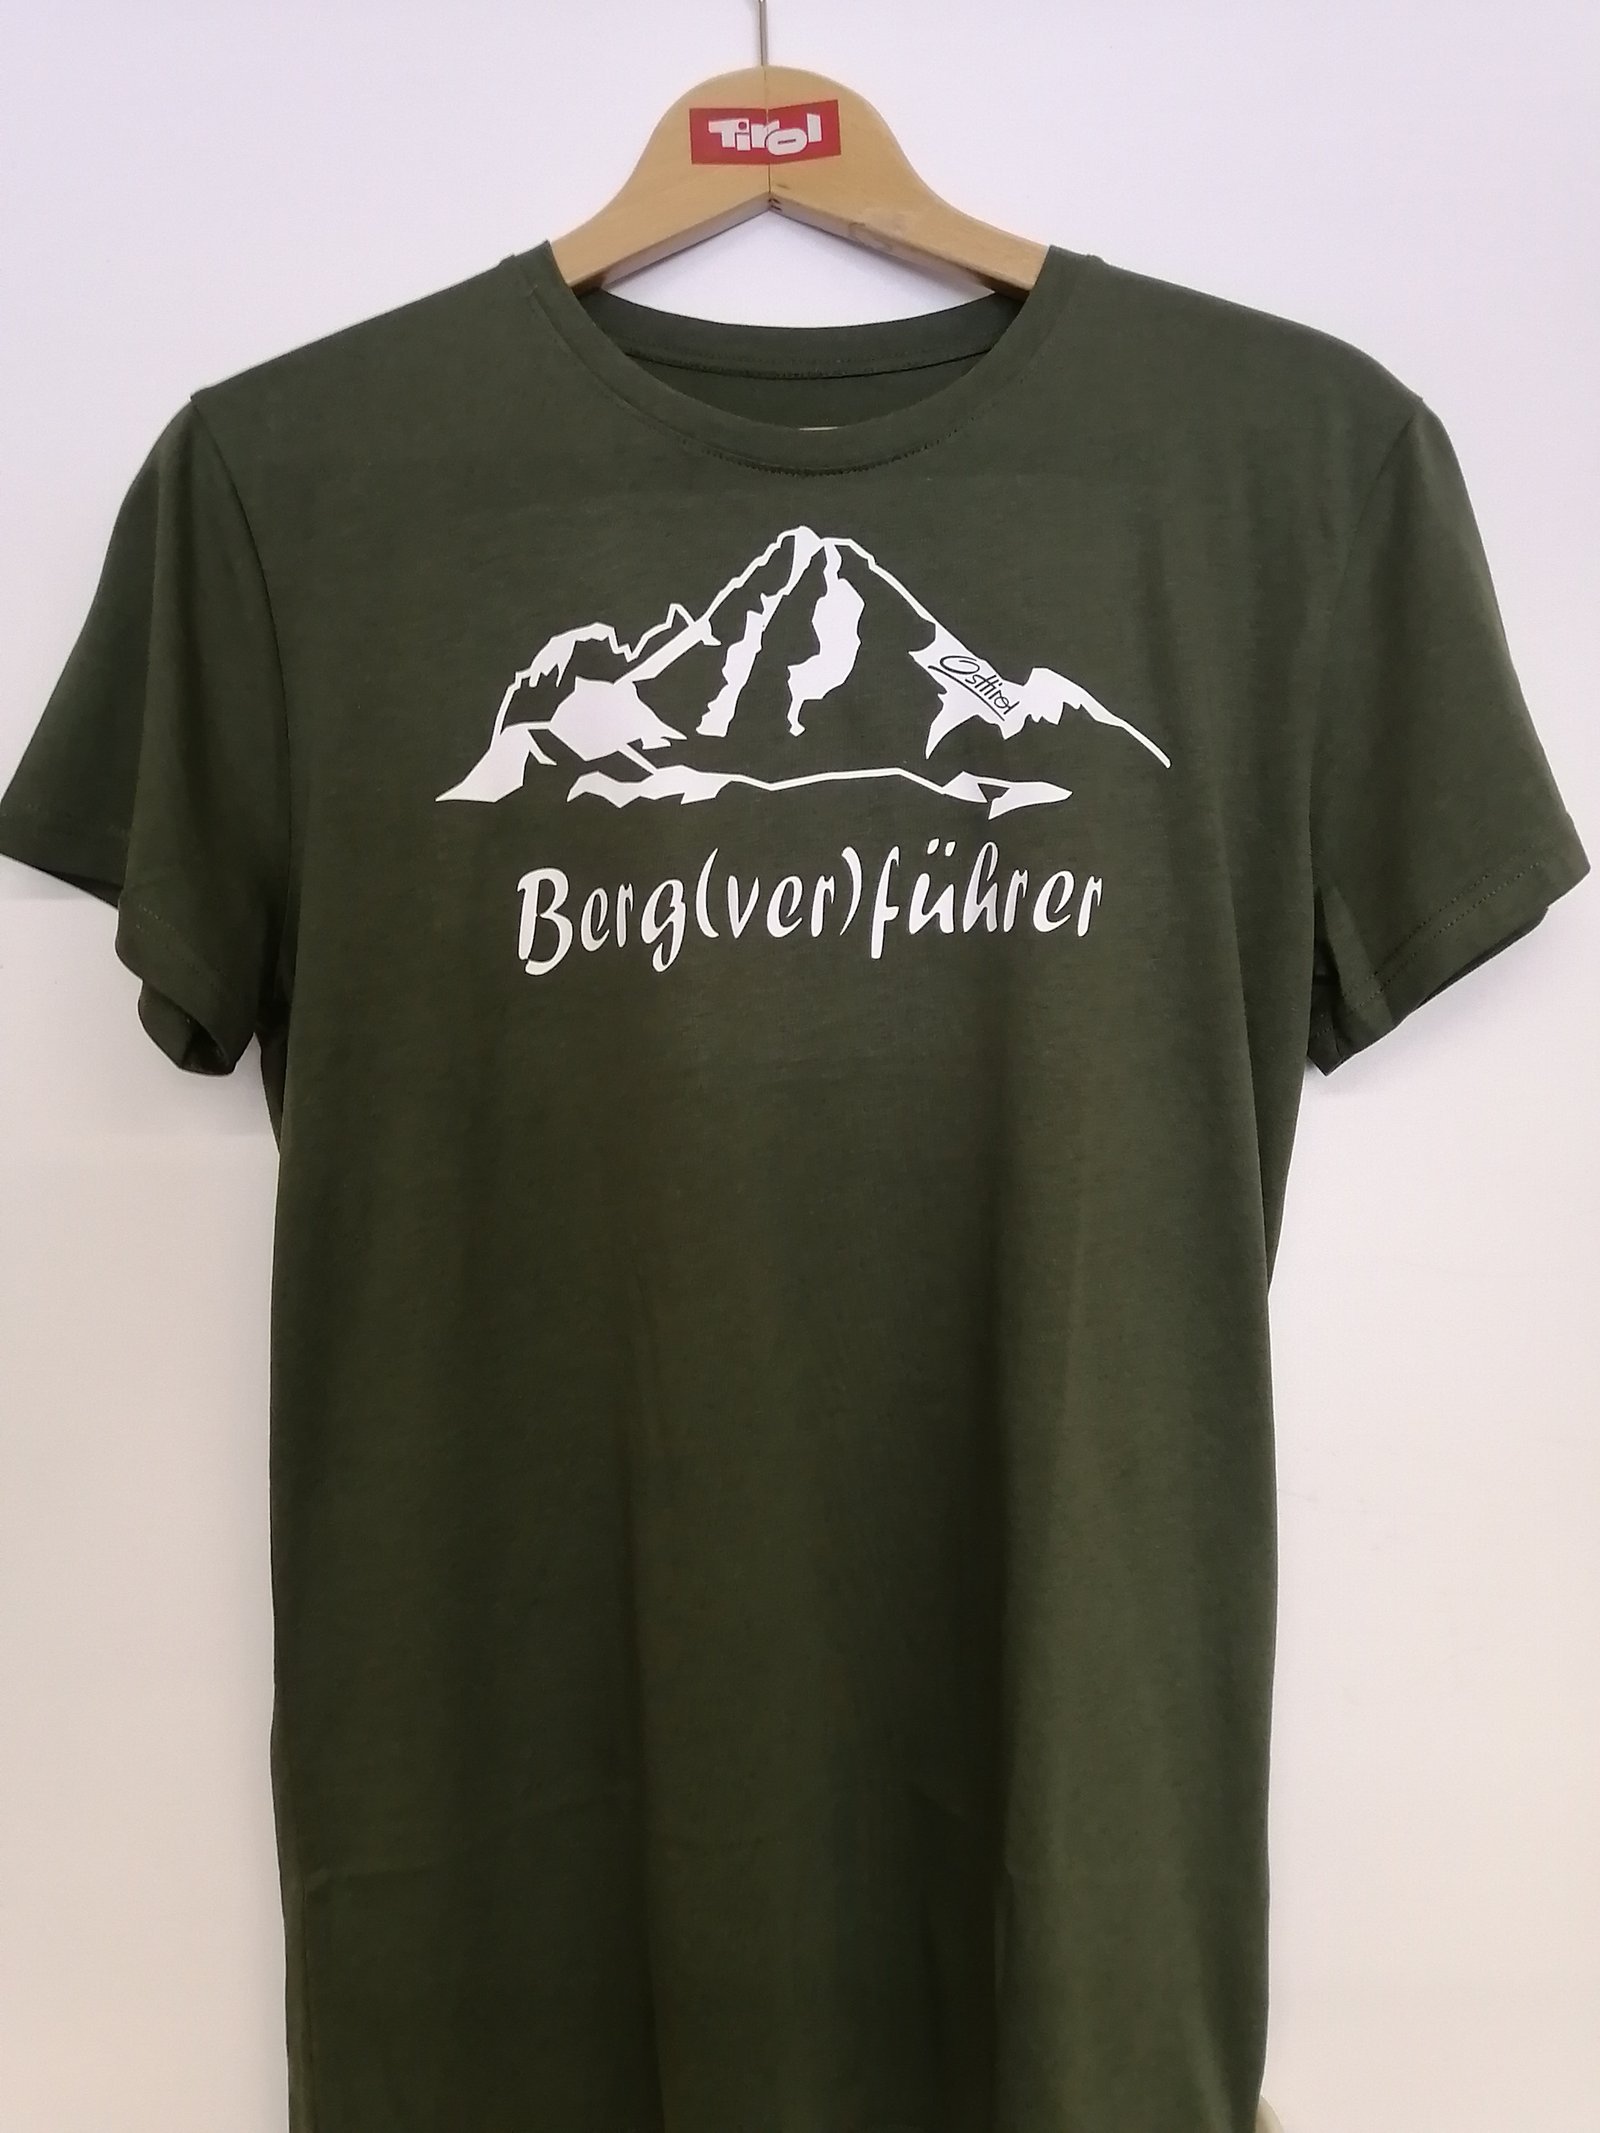 Herren T-Shirt "Berg(ver)führer, grün